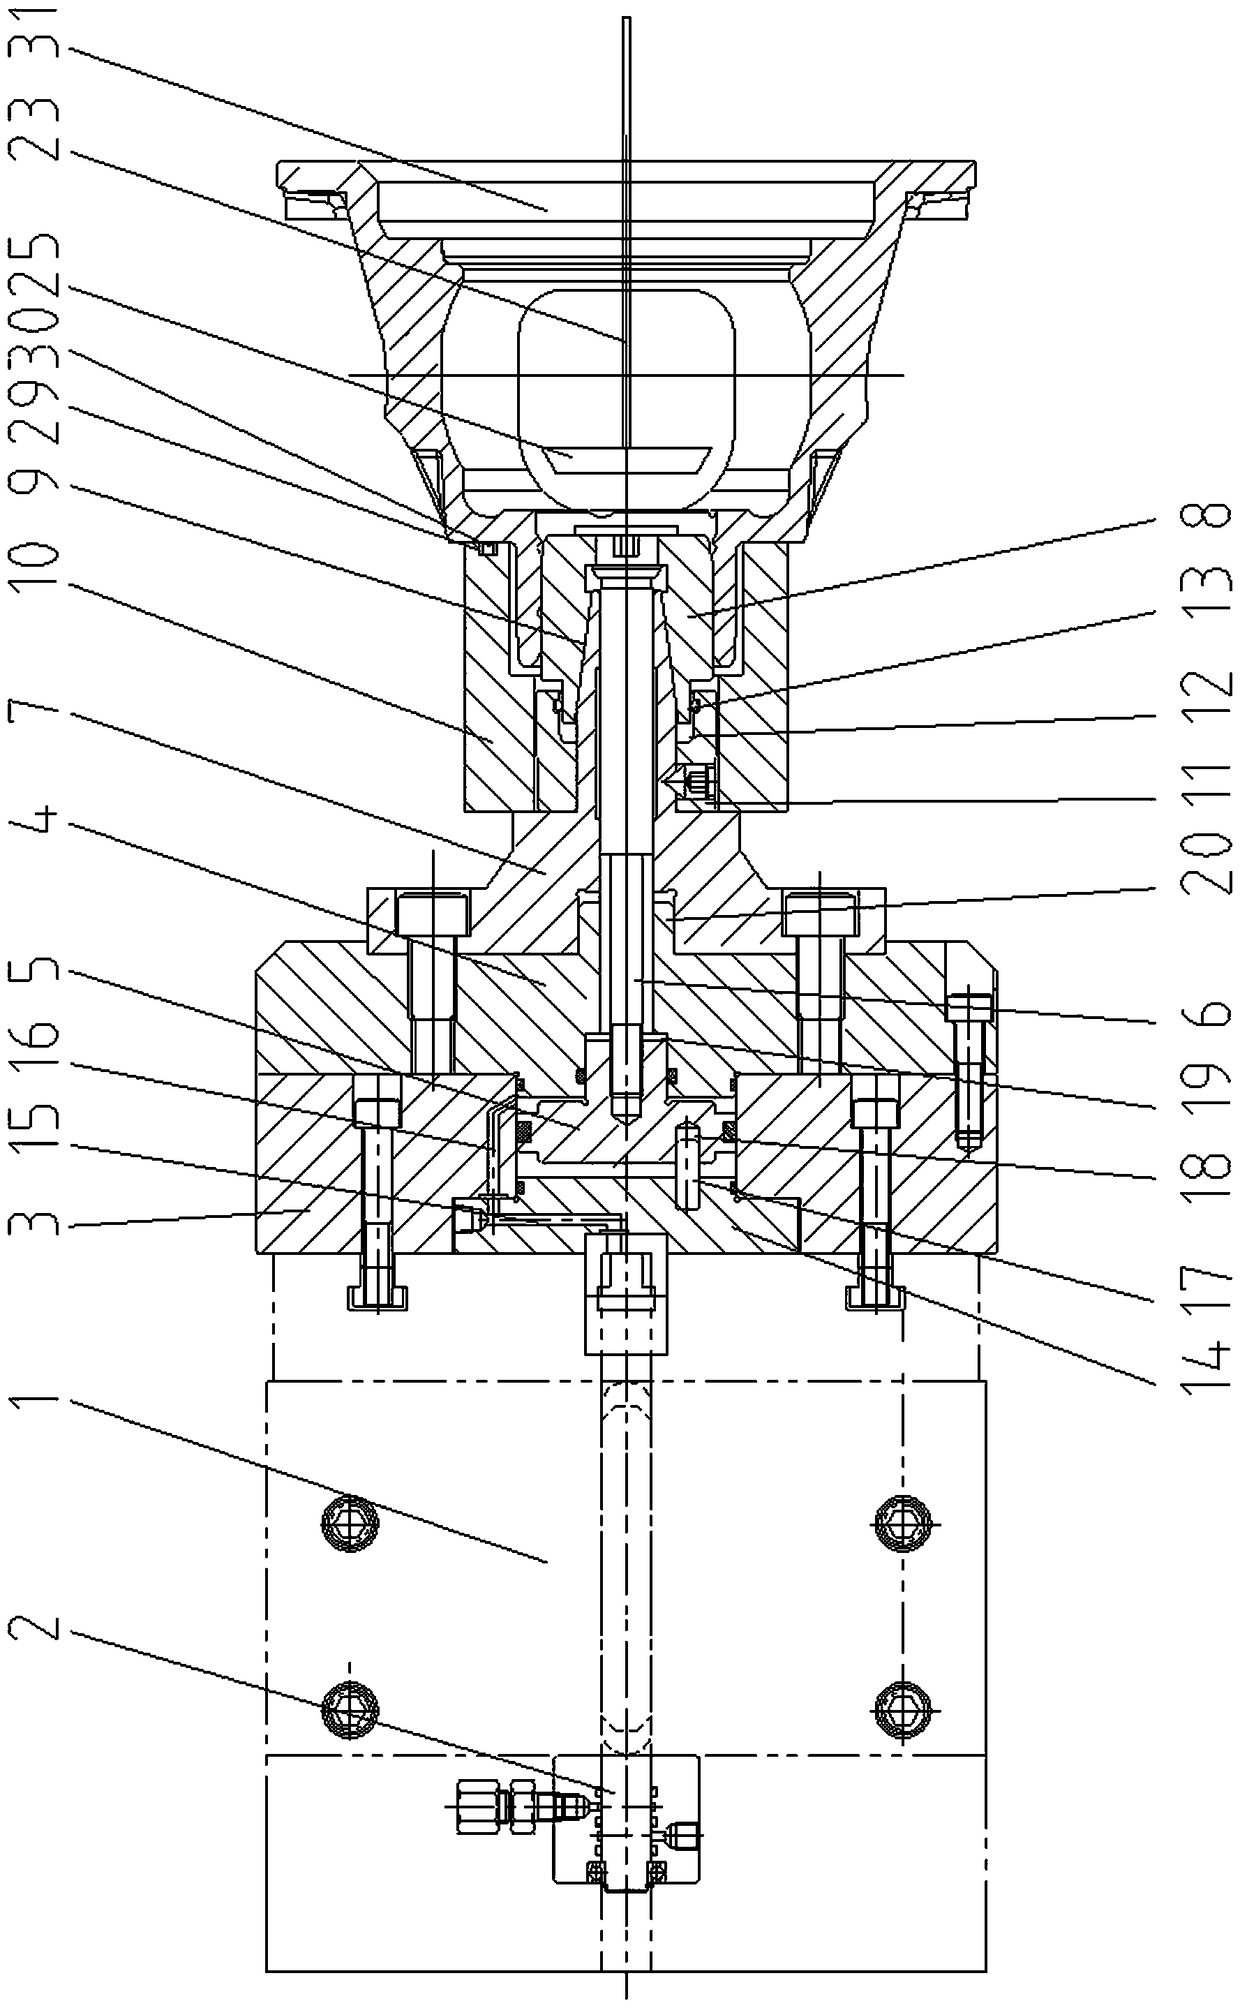 Split differential shell internal expansion machining method